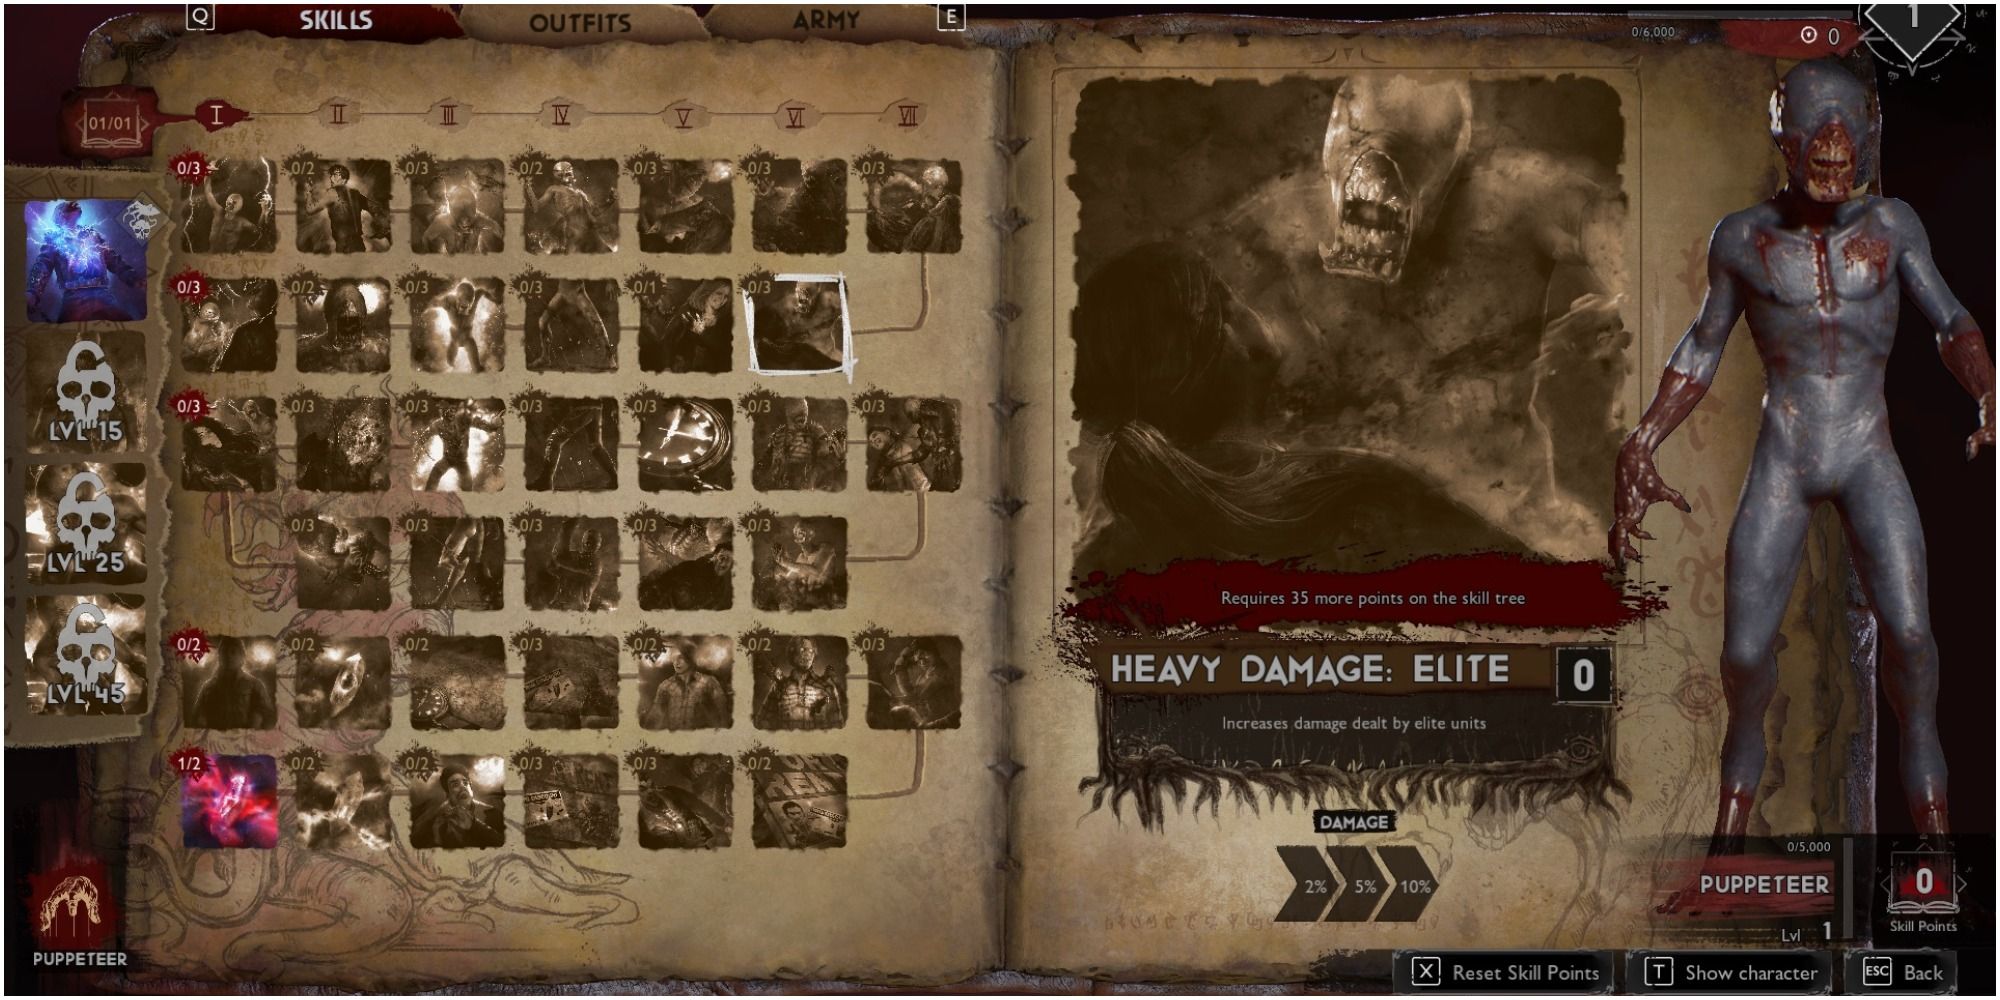 Evil Dead The Game Puppeteer Skill Heavy Damage Elite Description